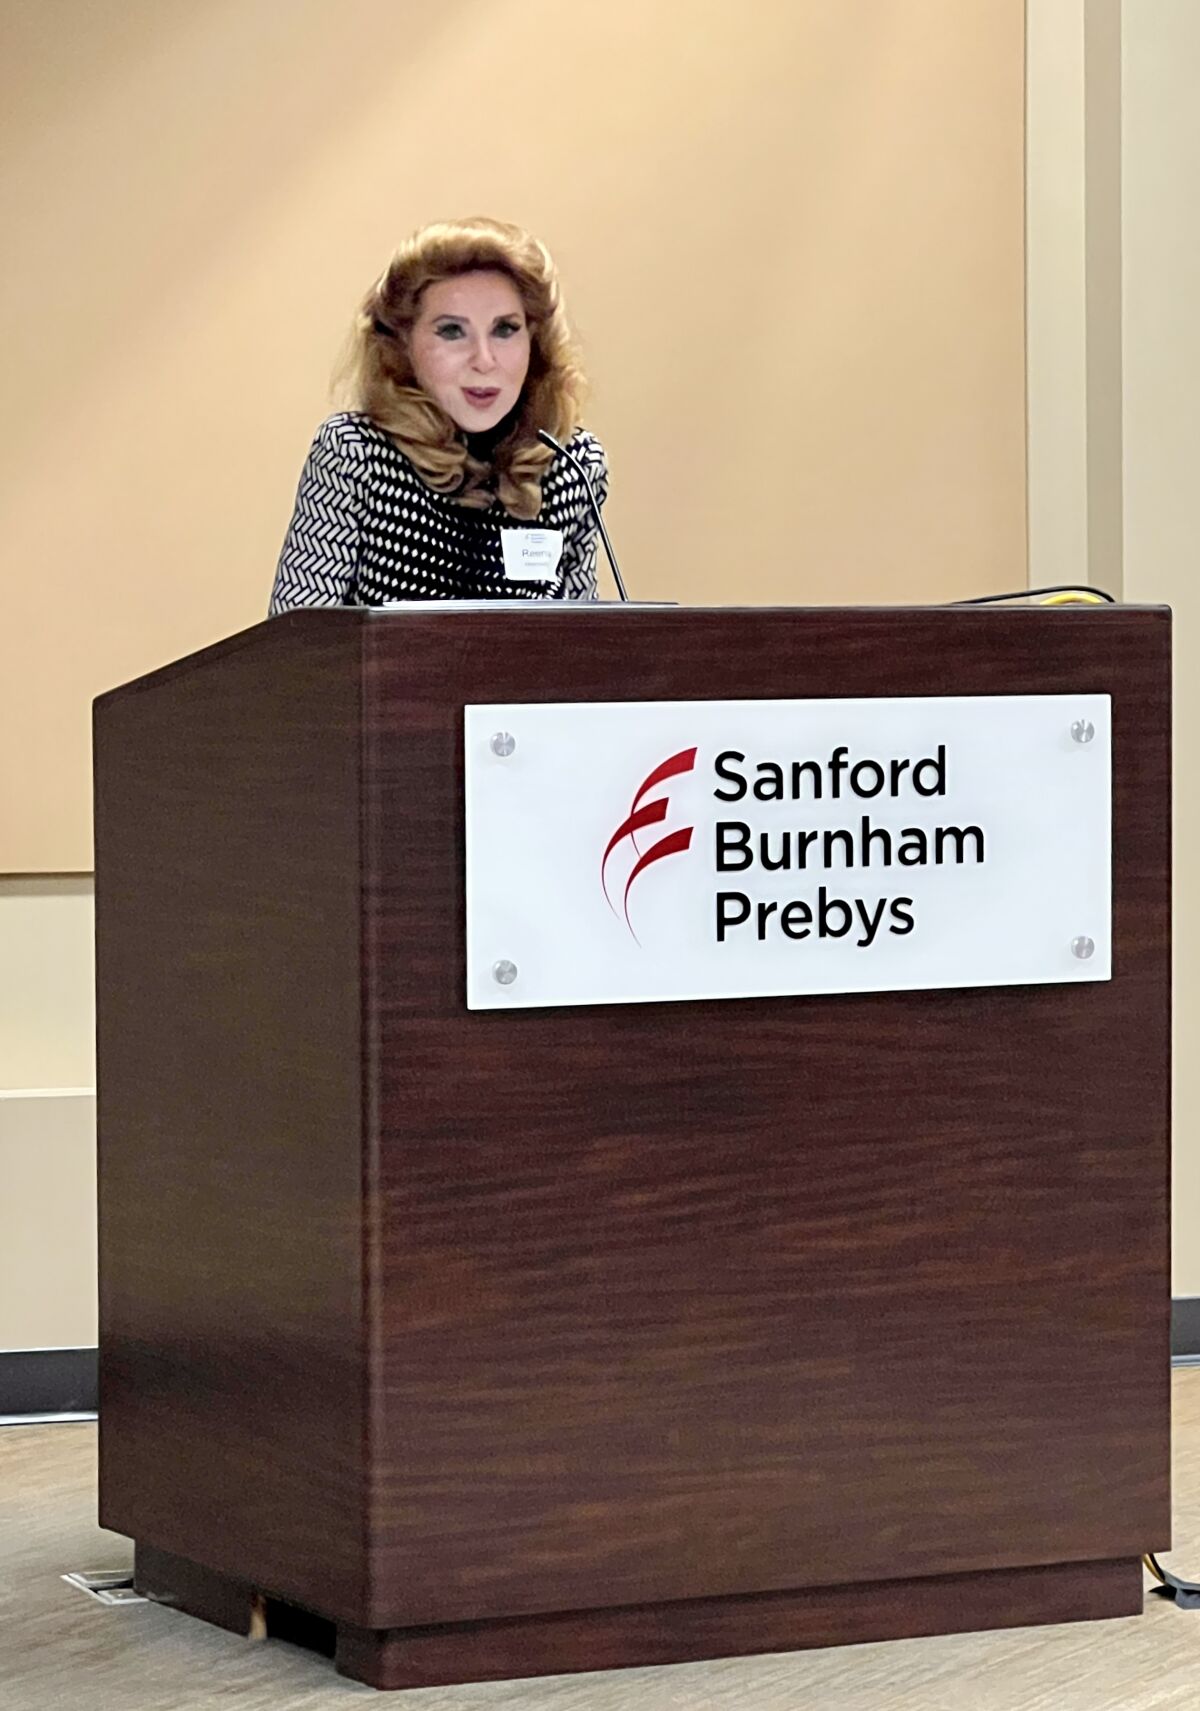 Reena Horowitz, co-founder of Sanford Burnham Prebys' G12 talks, speaks at the Jan. 24 event.